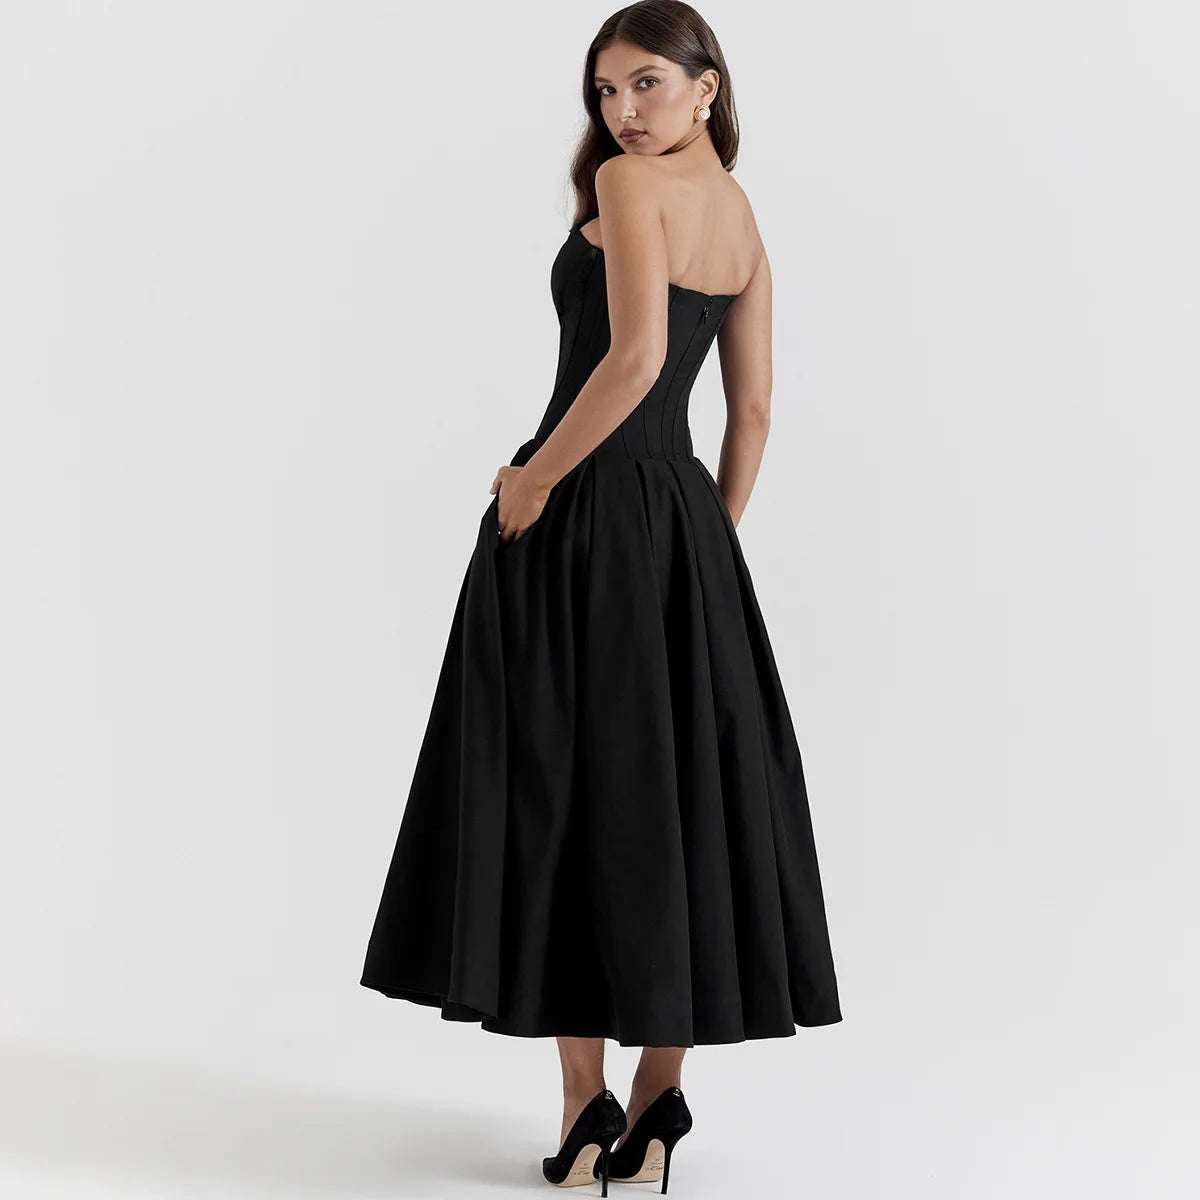 Strapless Corset Style Long Dresses